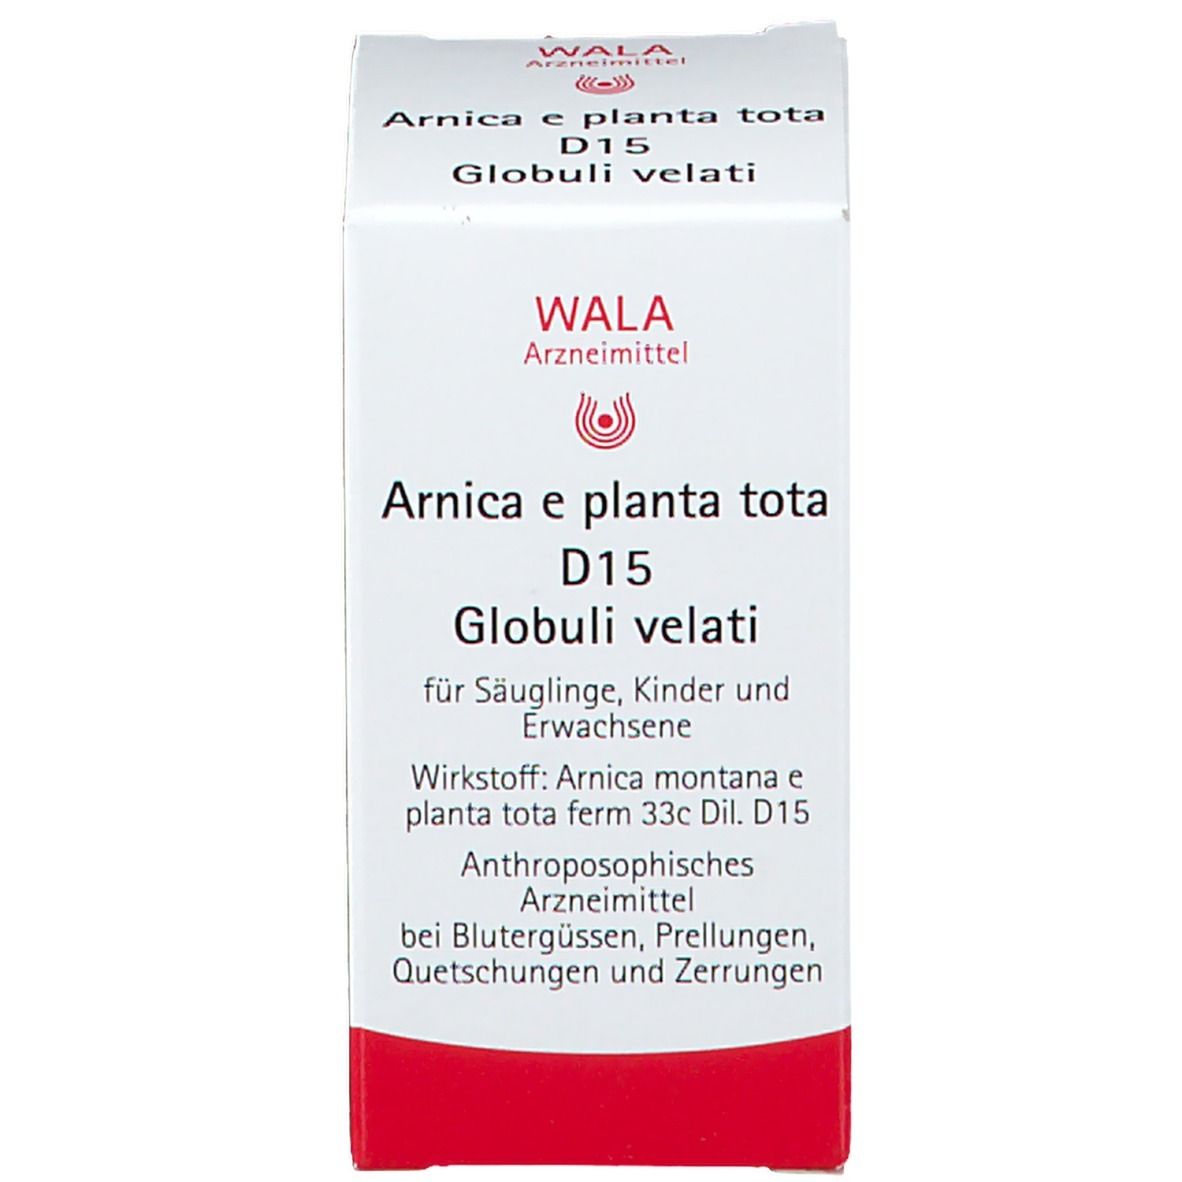 WALA® Arnica E Planta tota D 15 Globuli